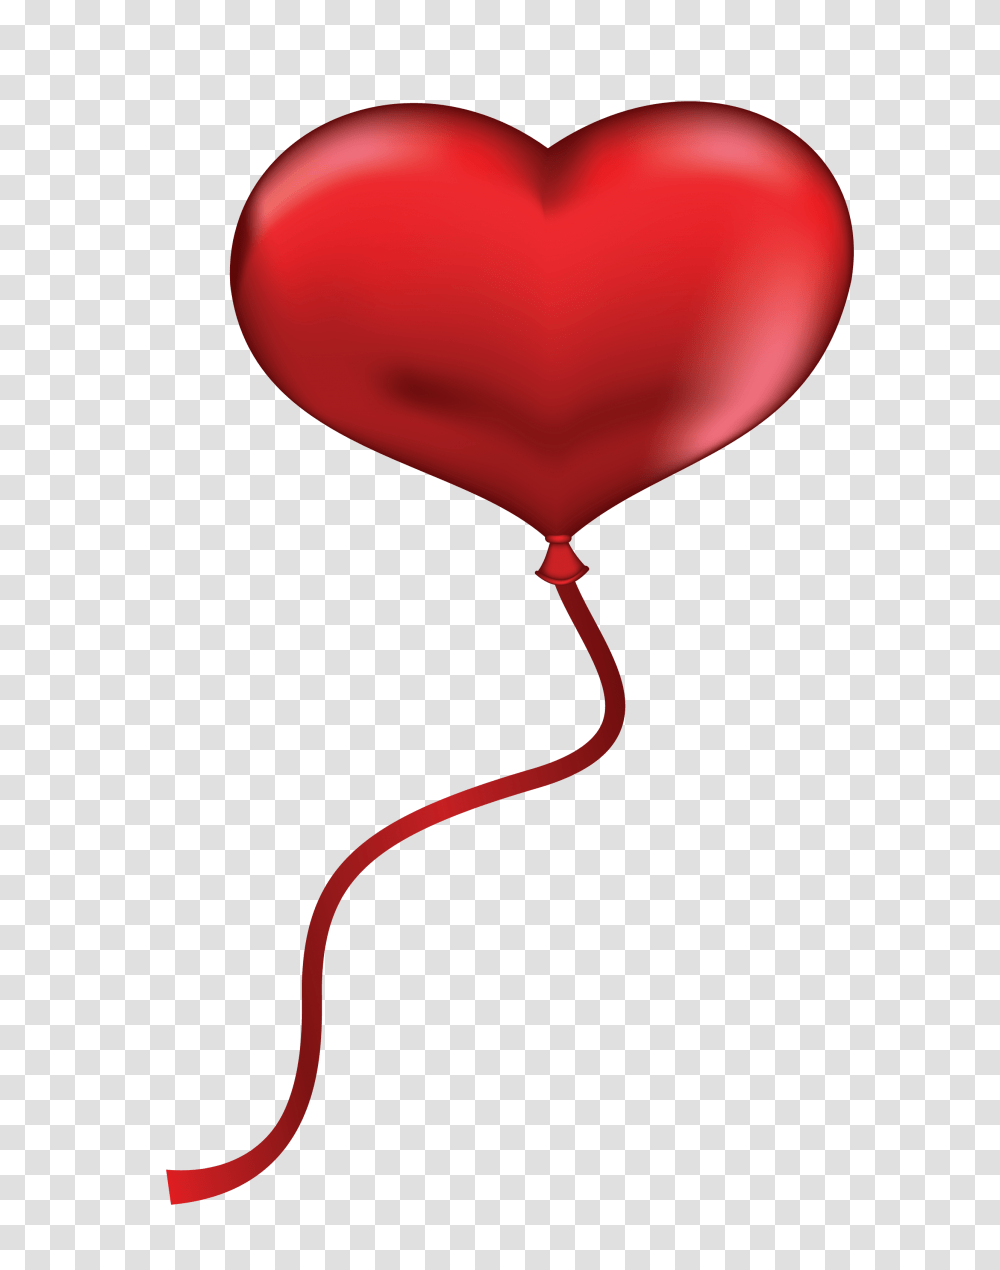 Pix For Gt Red Heart Outline Black Celebration, Balloon Transparent Png